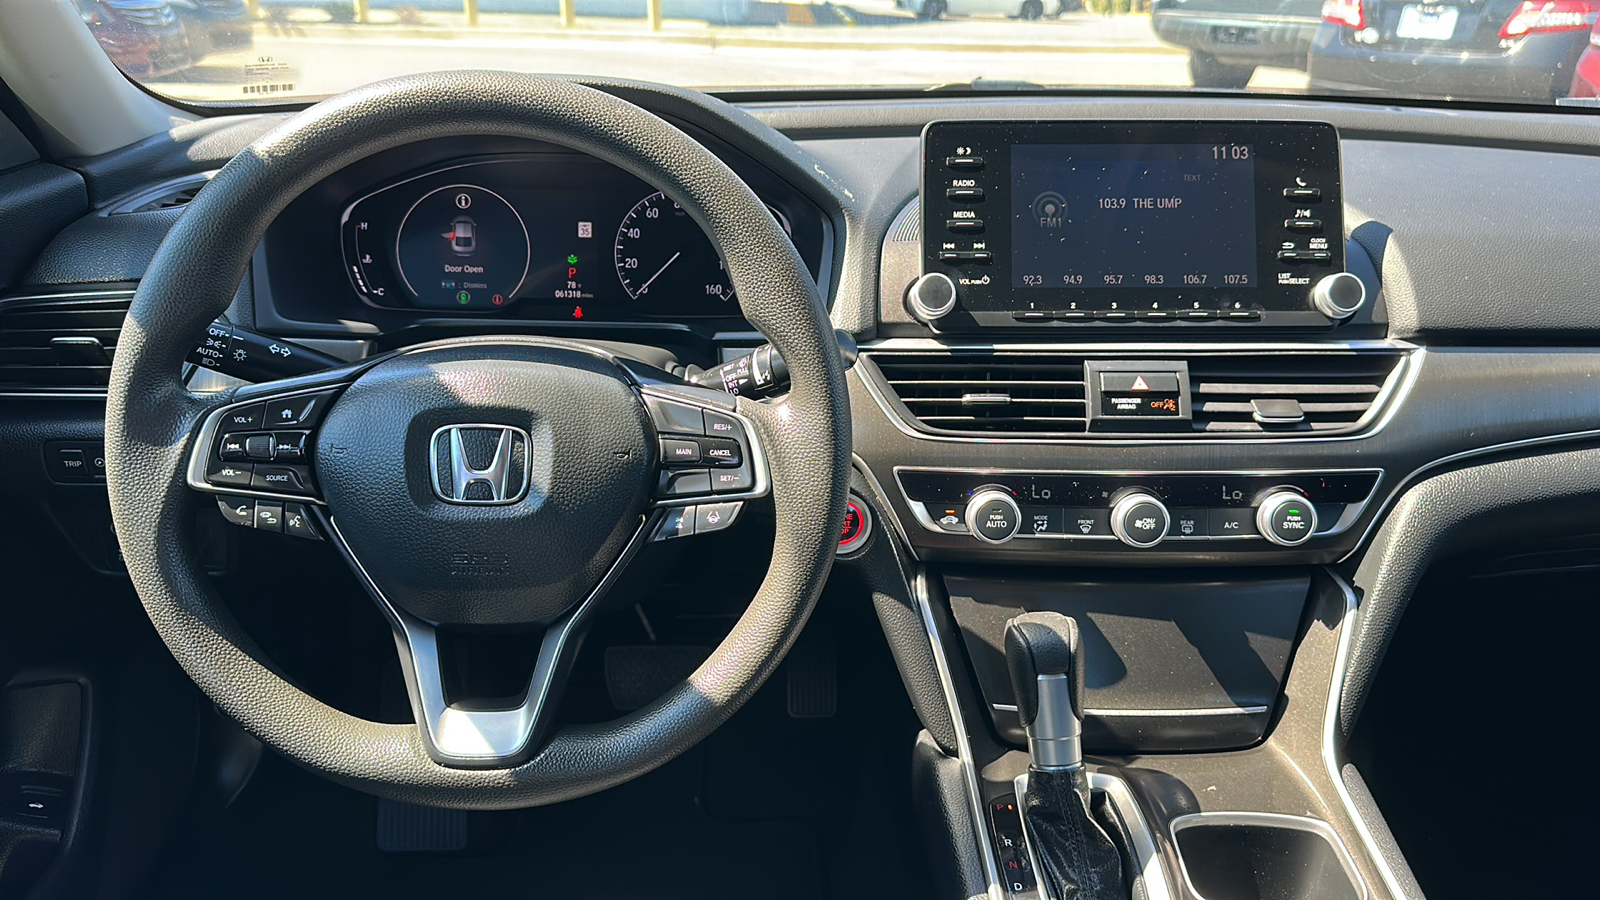 2019 Honda Accord LX 1.5T 10